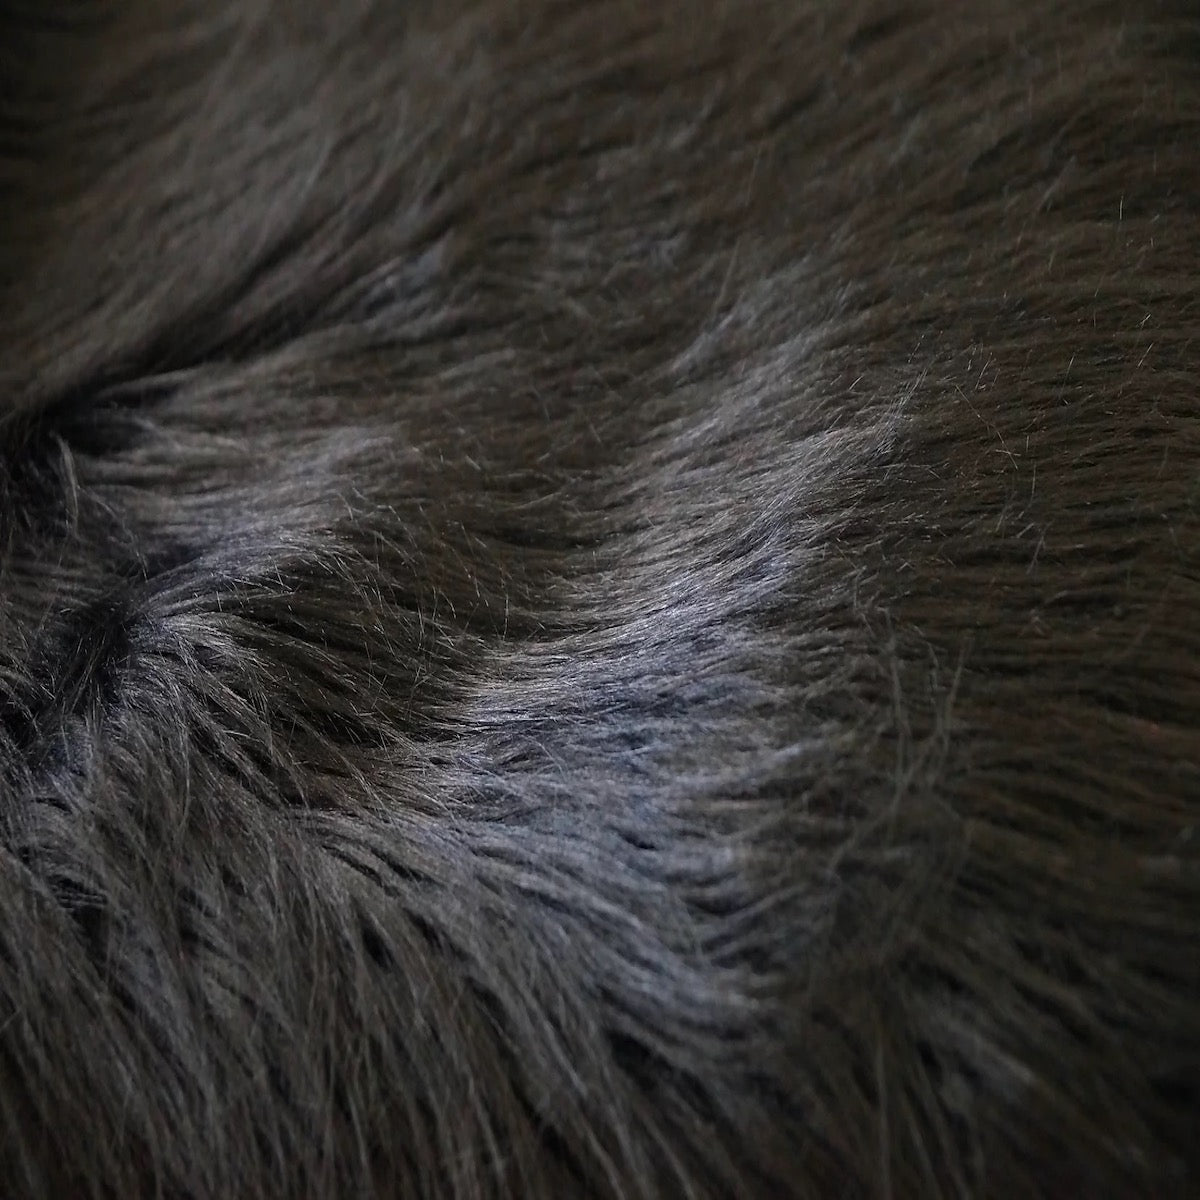 Best Long Pile Faux Fur Fabric - Comfort International